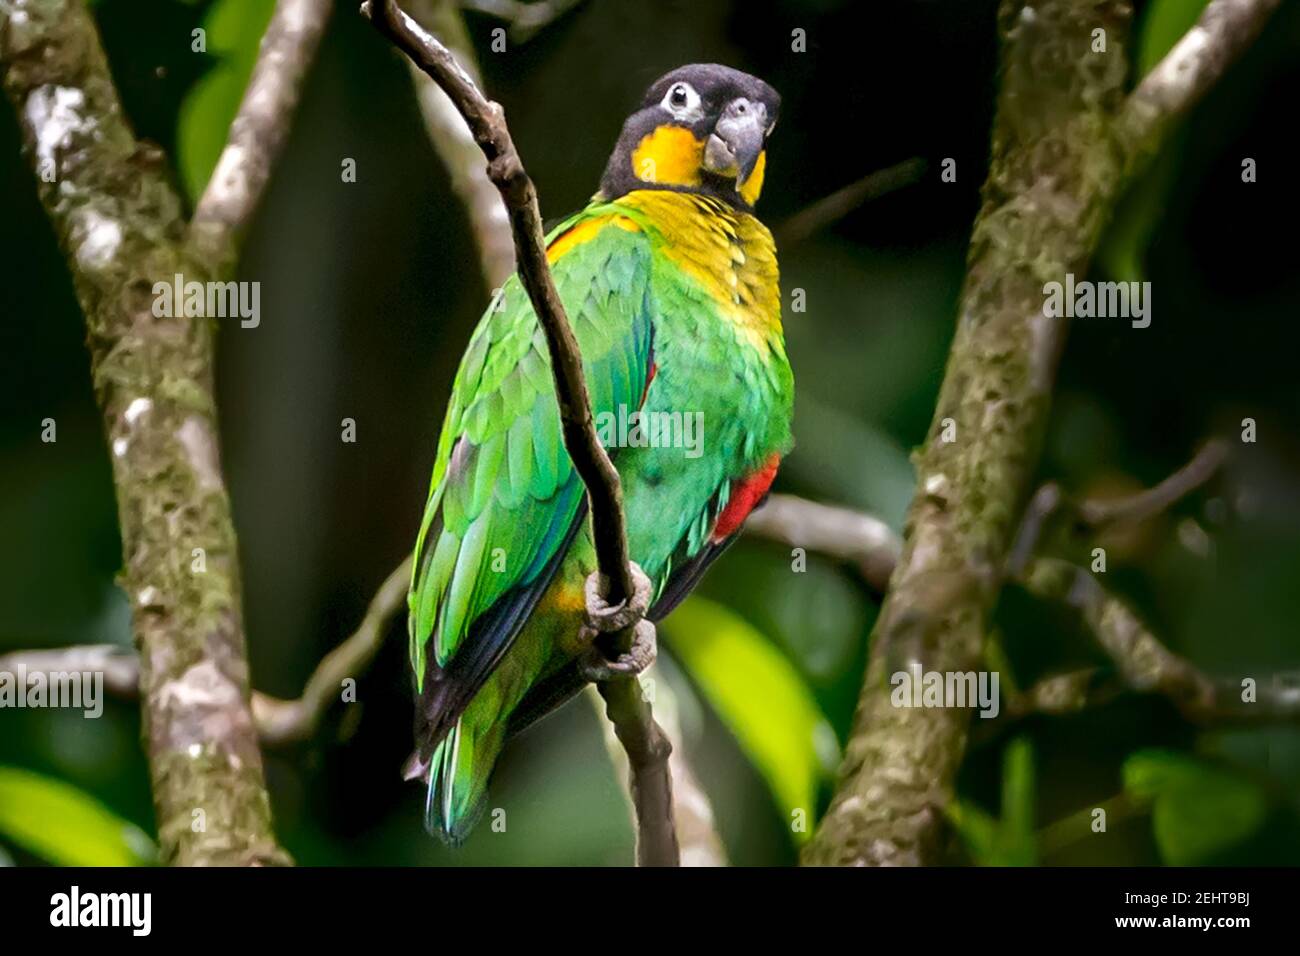 Orange-cheeked parrot, Pionopsitta barrabandi, Saladero de Pericos, Salt/Mineral/Parrot/clay licks, Napo river, Yasuni National Park, Amazon rainfores Stock Photo